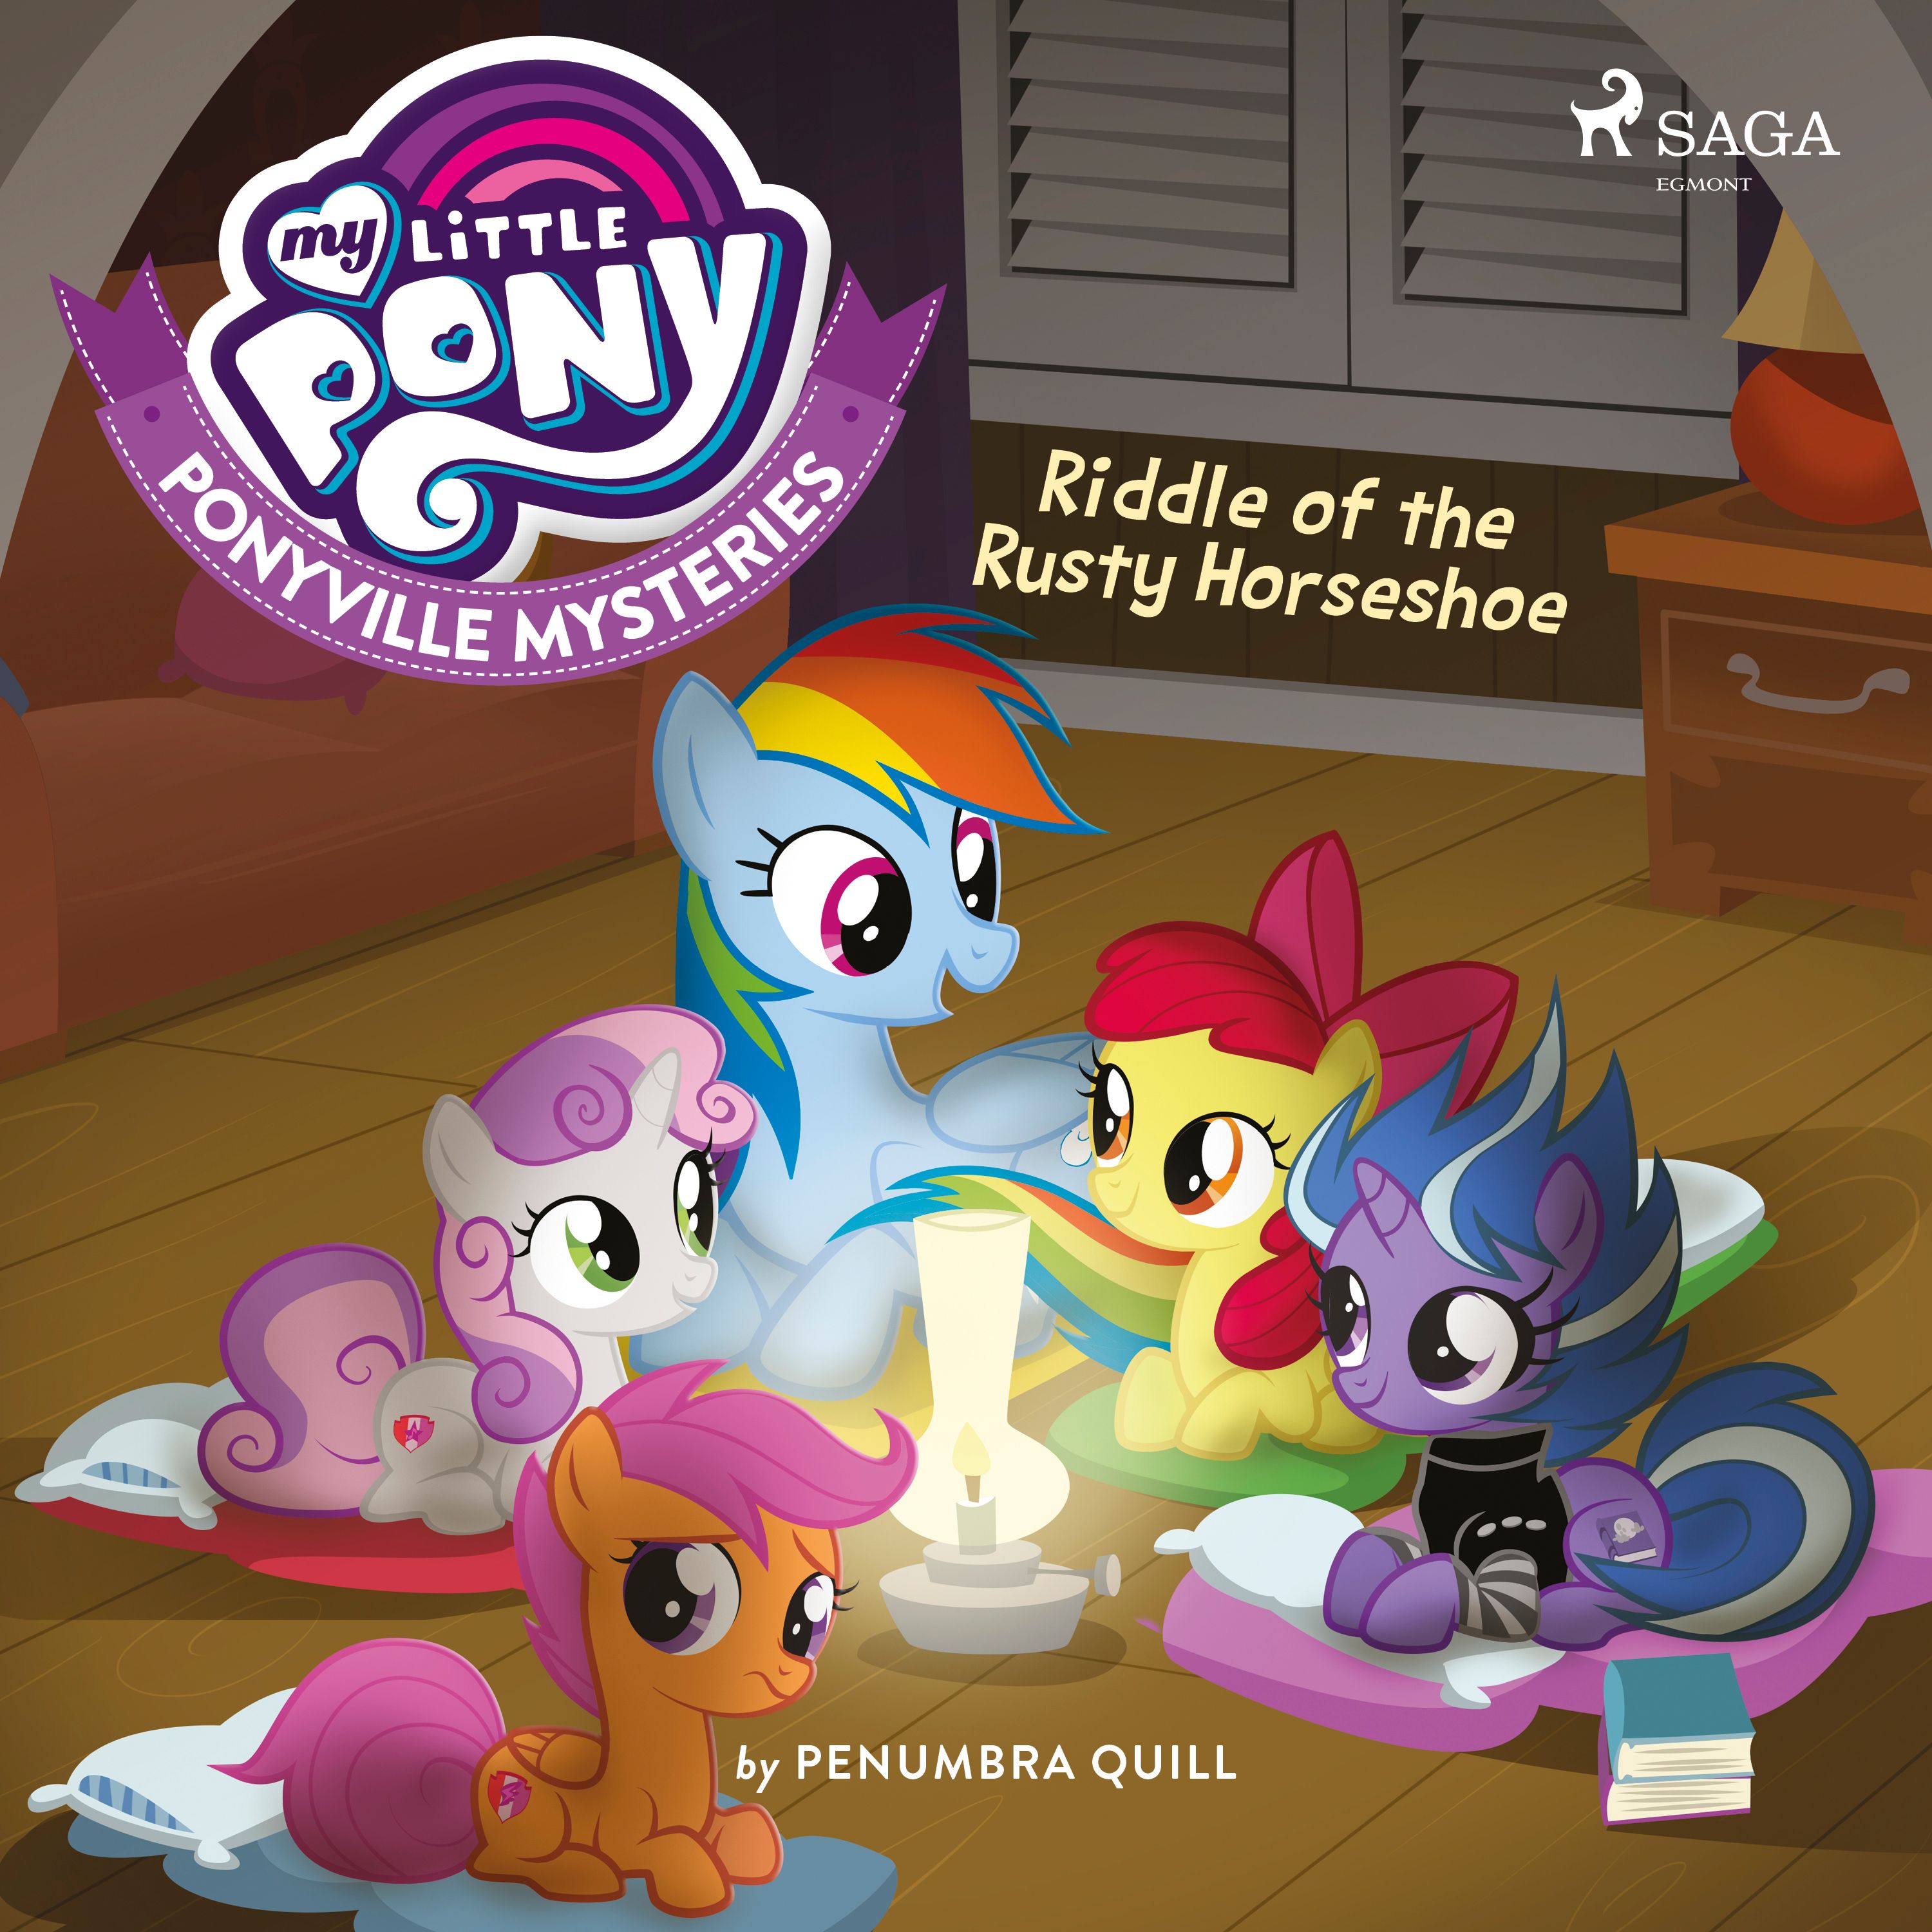 My Little Pony: Ponyville Mysteries: Riddle of the Rusty Horseshoe, ljudbok av Penumbra Quill